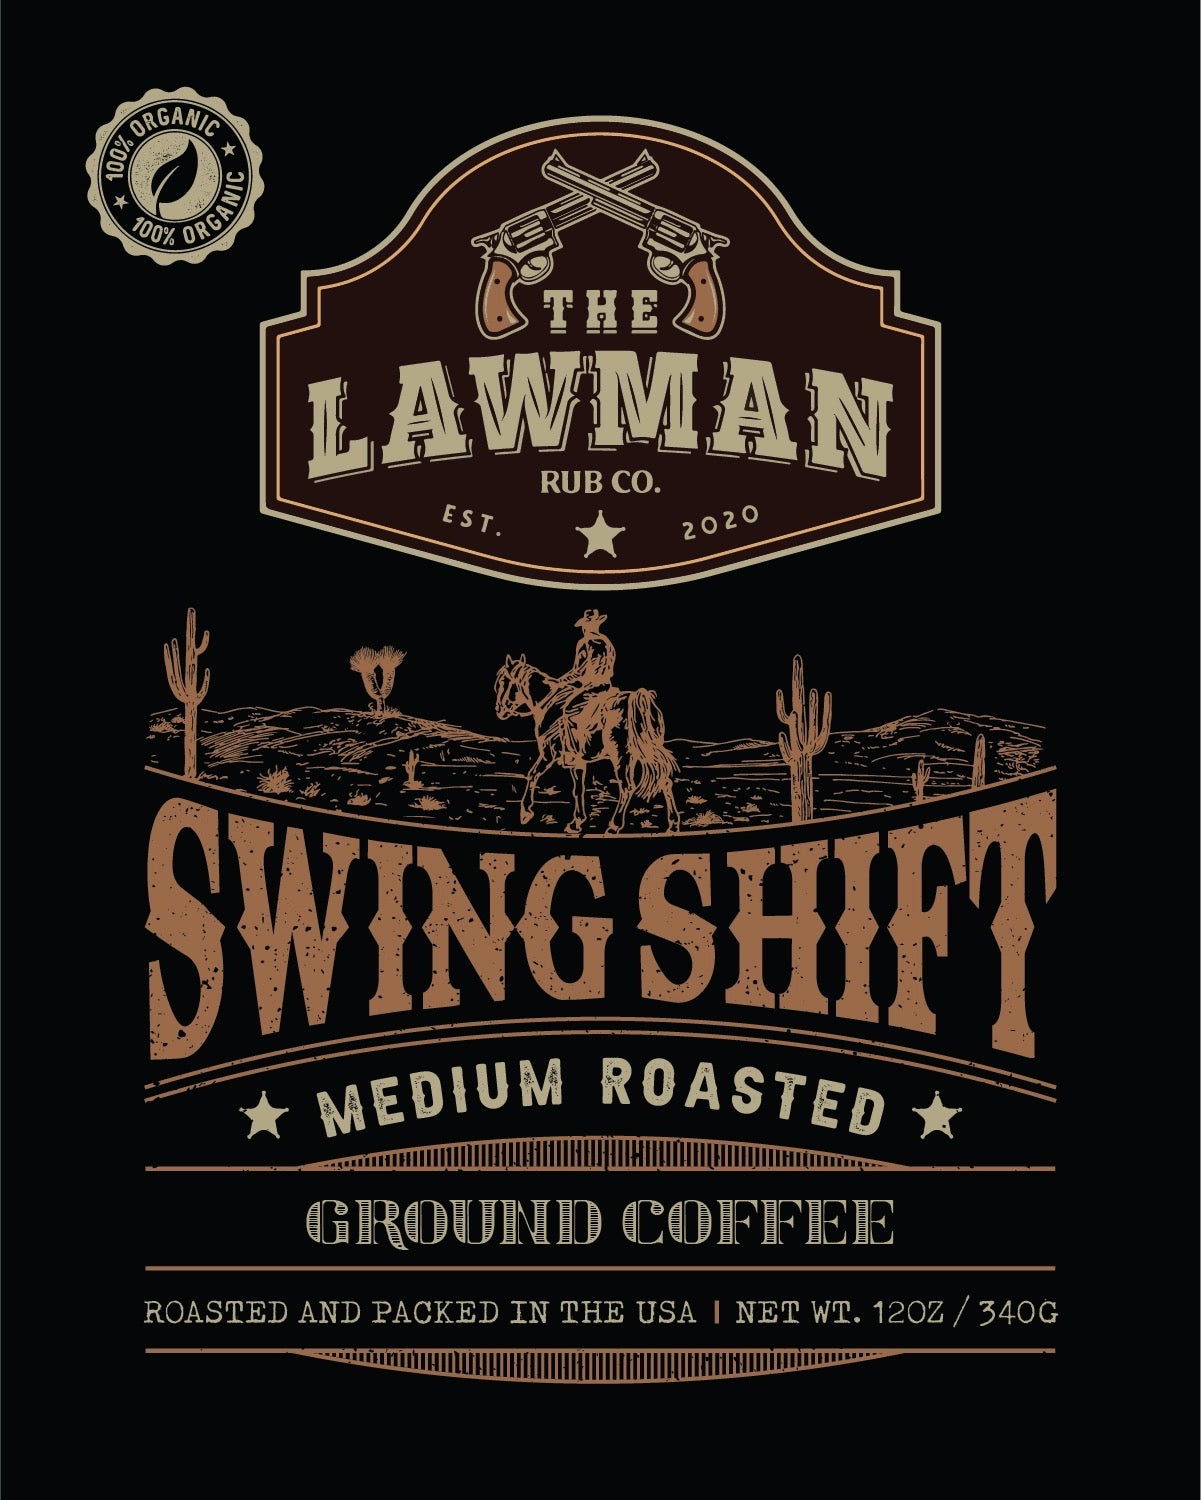 The Lawman "Swing Shift" Medium roast coffee